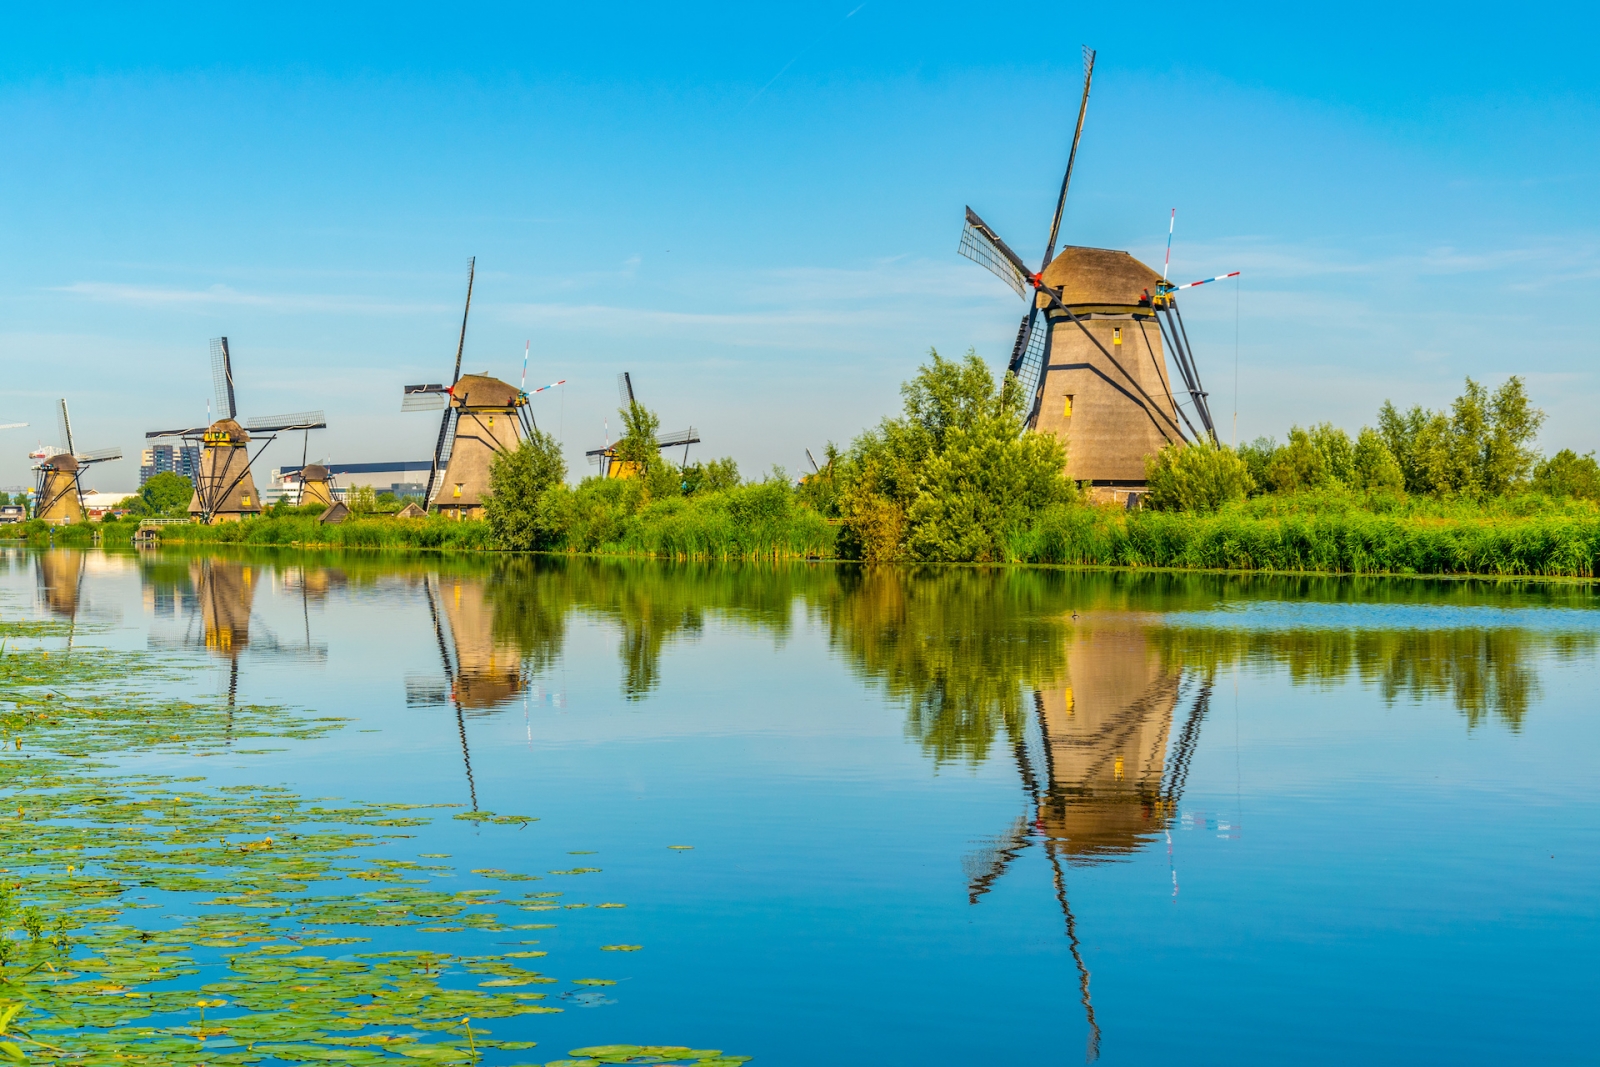 Kinderdijk windmills viewed during sunny summer day, Rotterdam, Netherlands